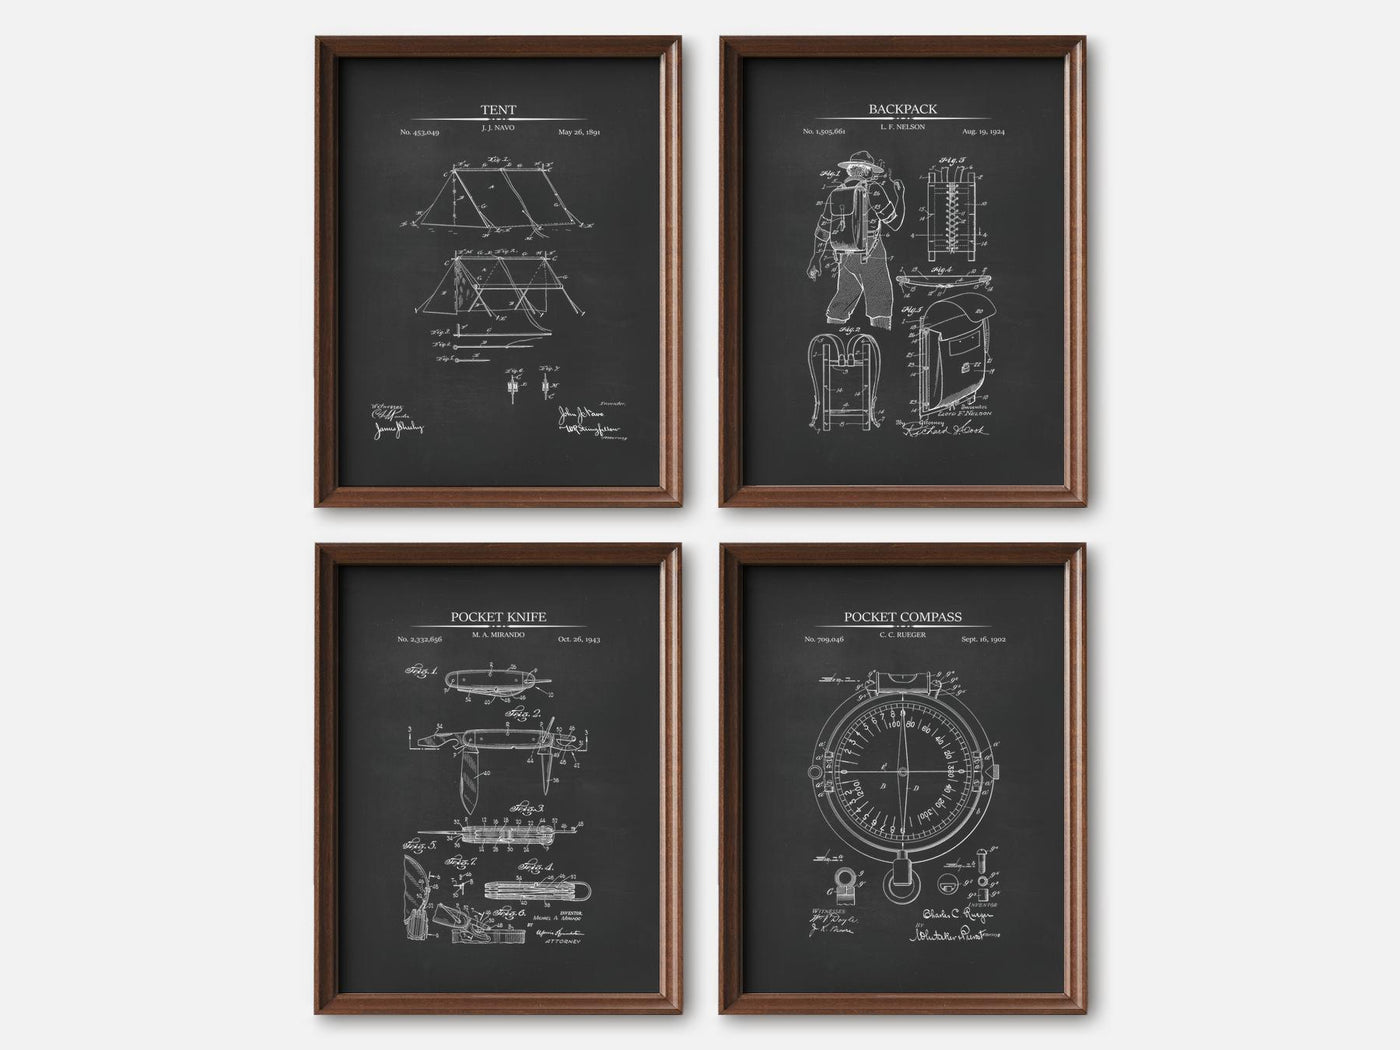 Camping Patent Print Set of 3 mockup - A_t10017-V1-PC_F+WA-SS_4-PS_5x7-C_cha variant